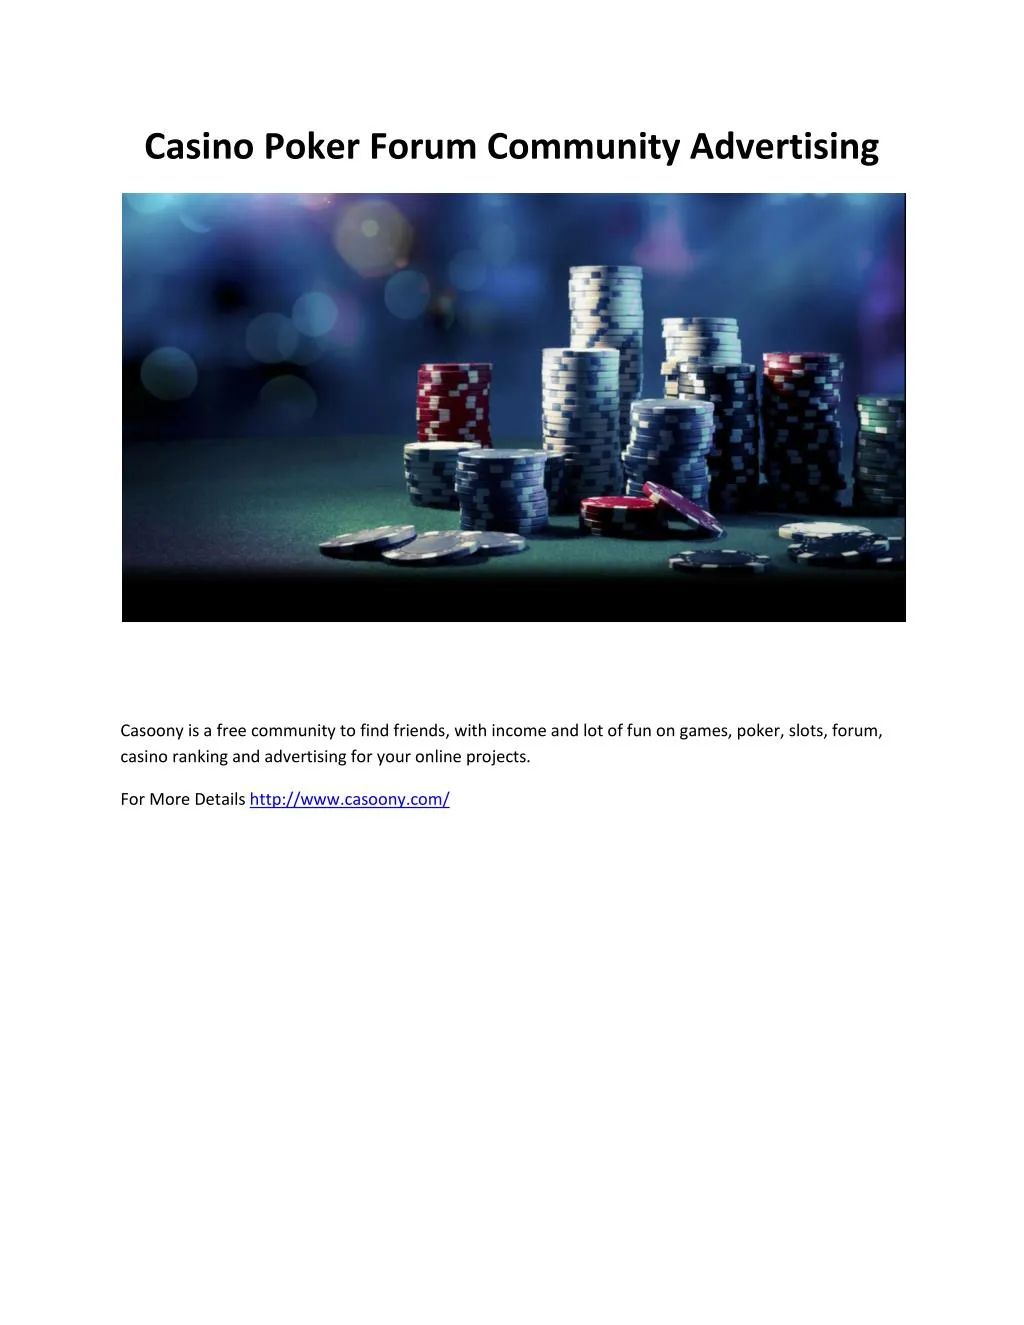 casino poker forum community advertising